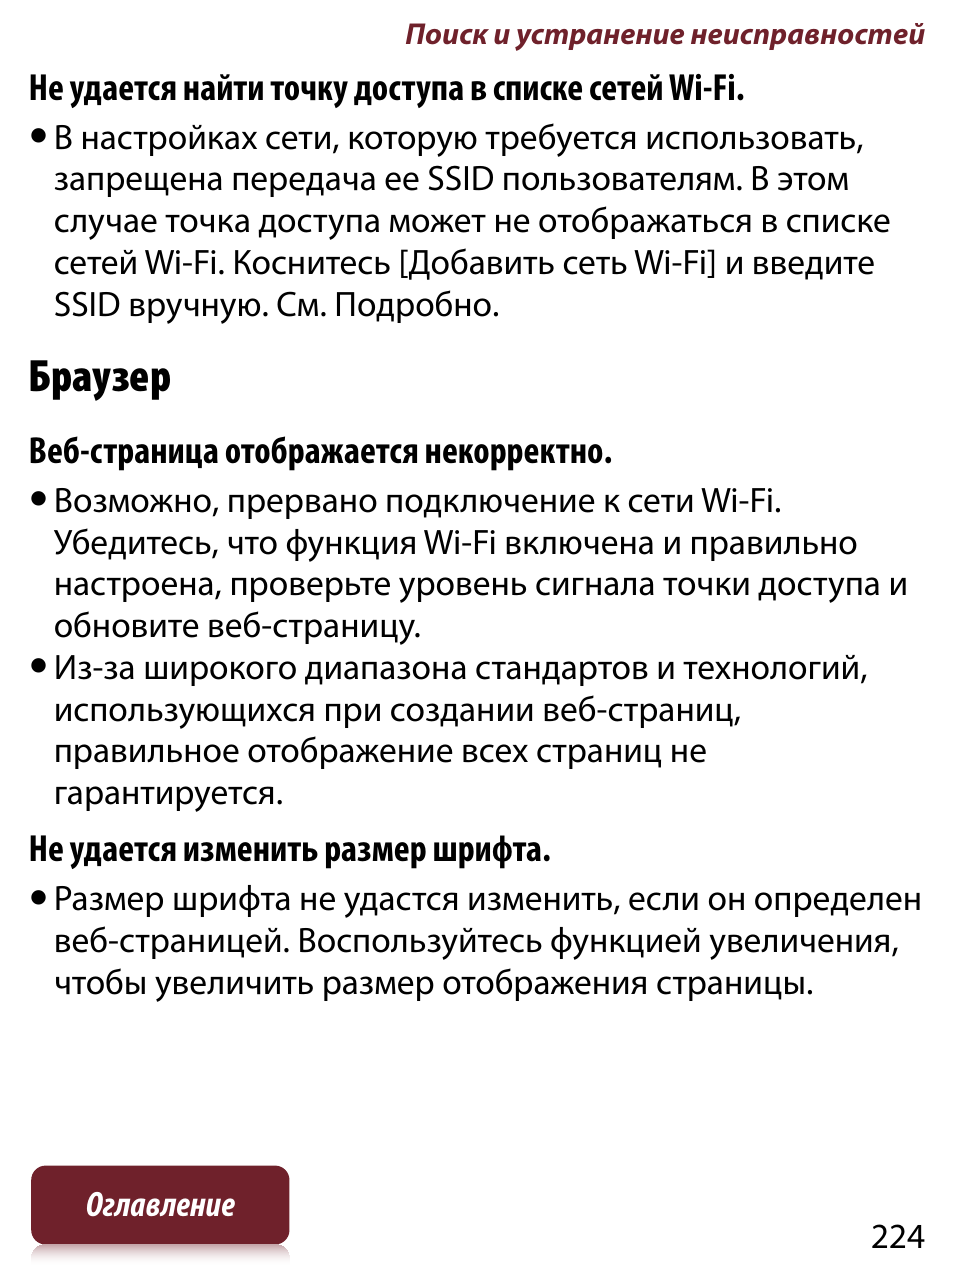 Браузер | Инструкция по эксплуатации Sony PRS-T1 | Страница 224 / 267